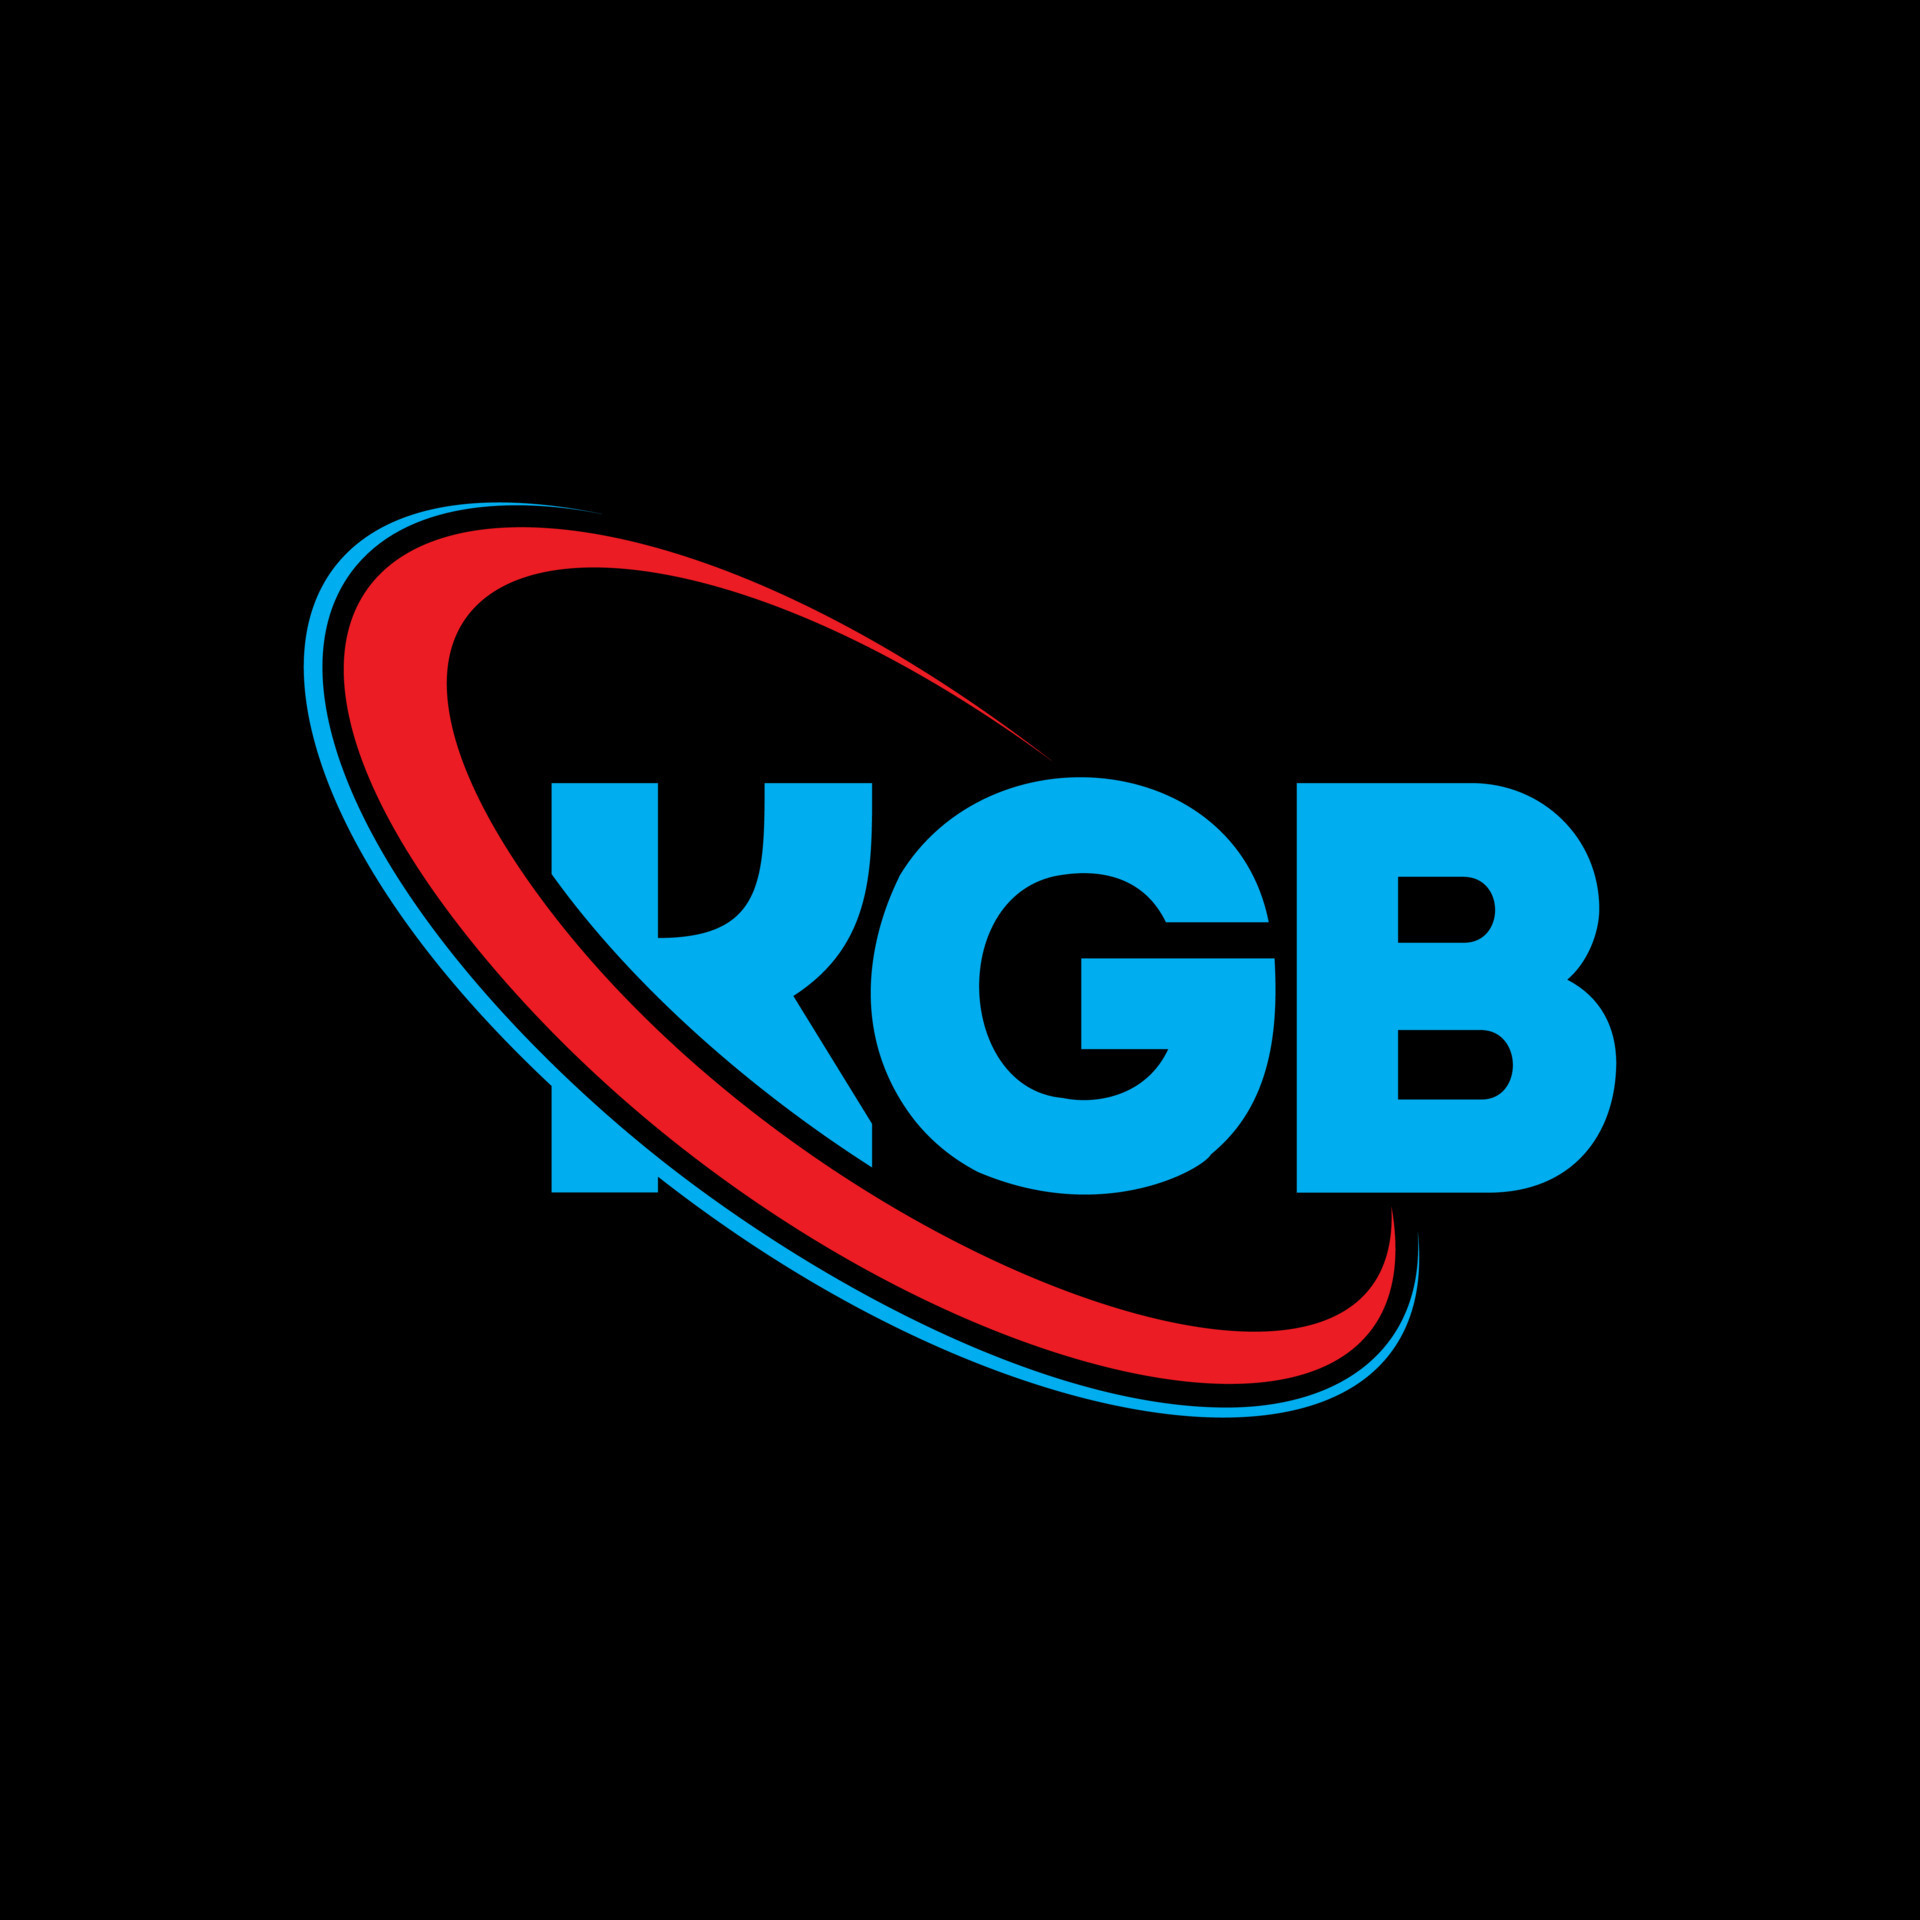 kgb symbol